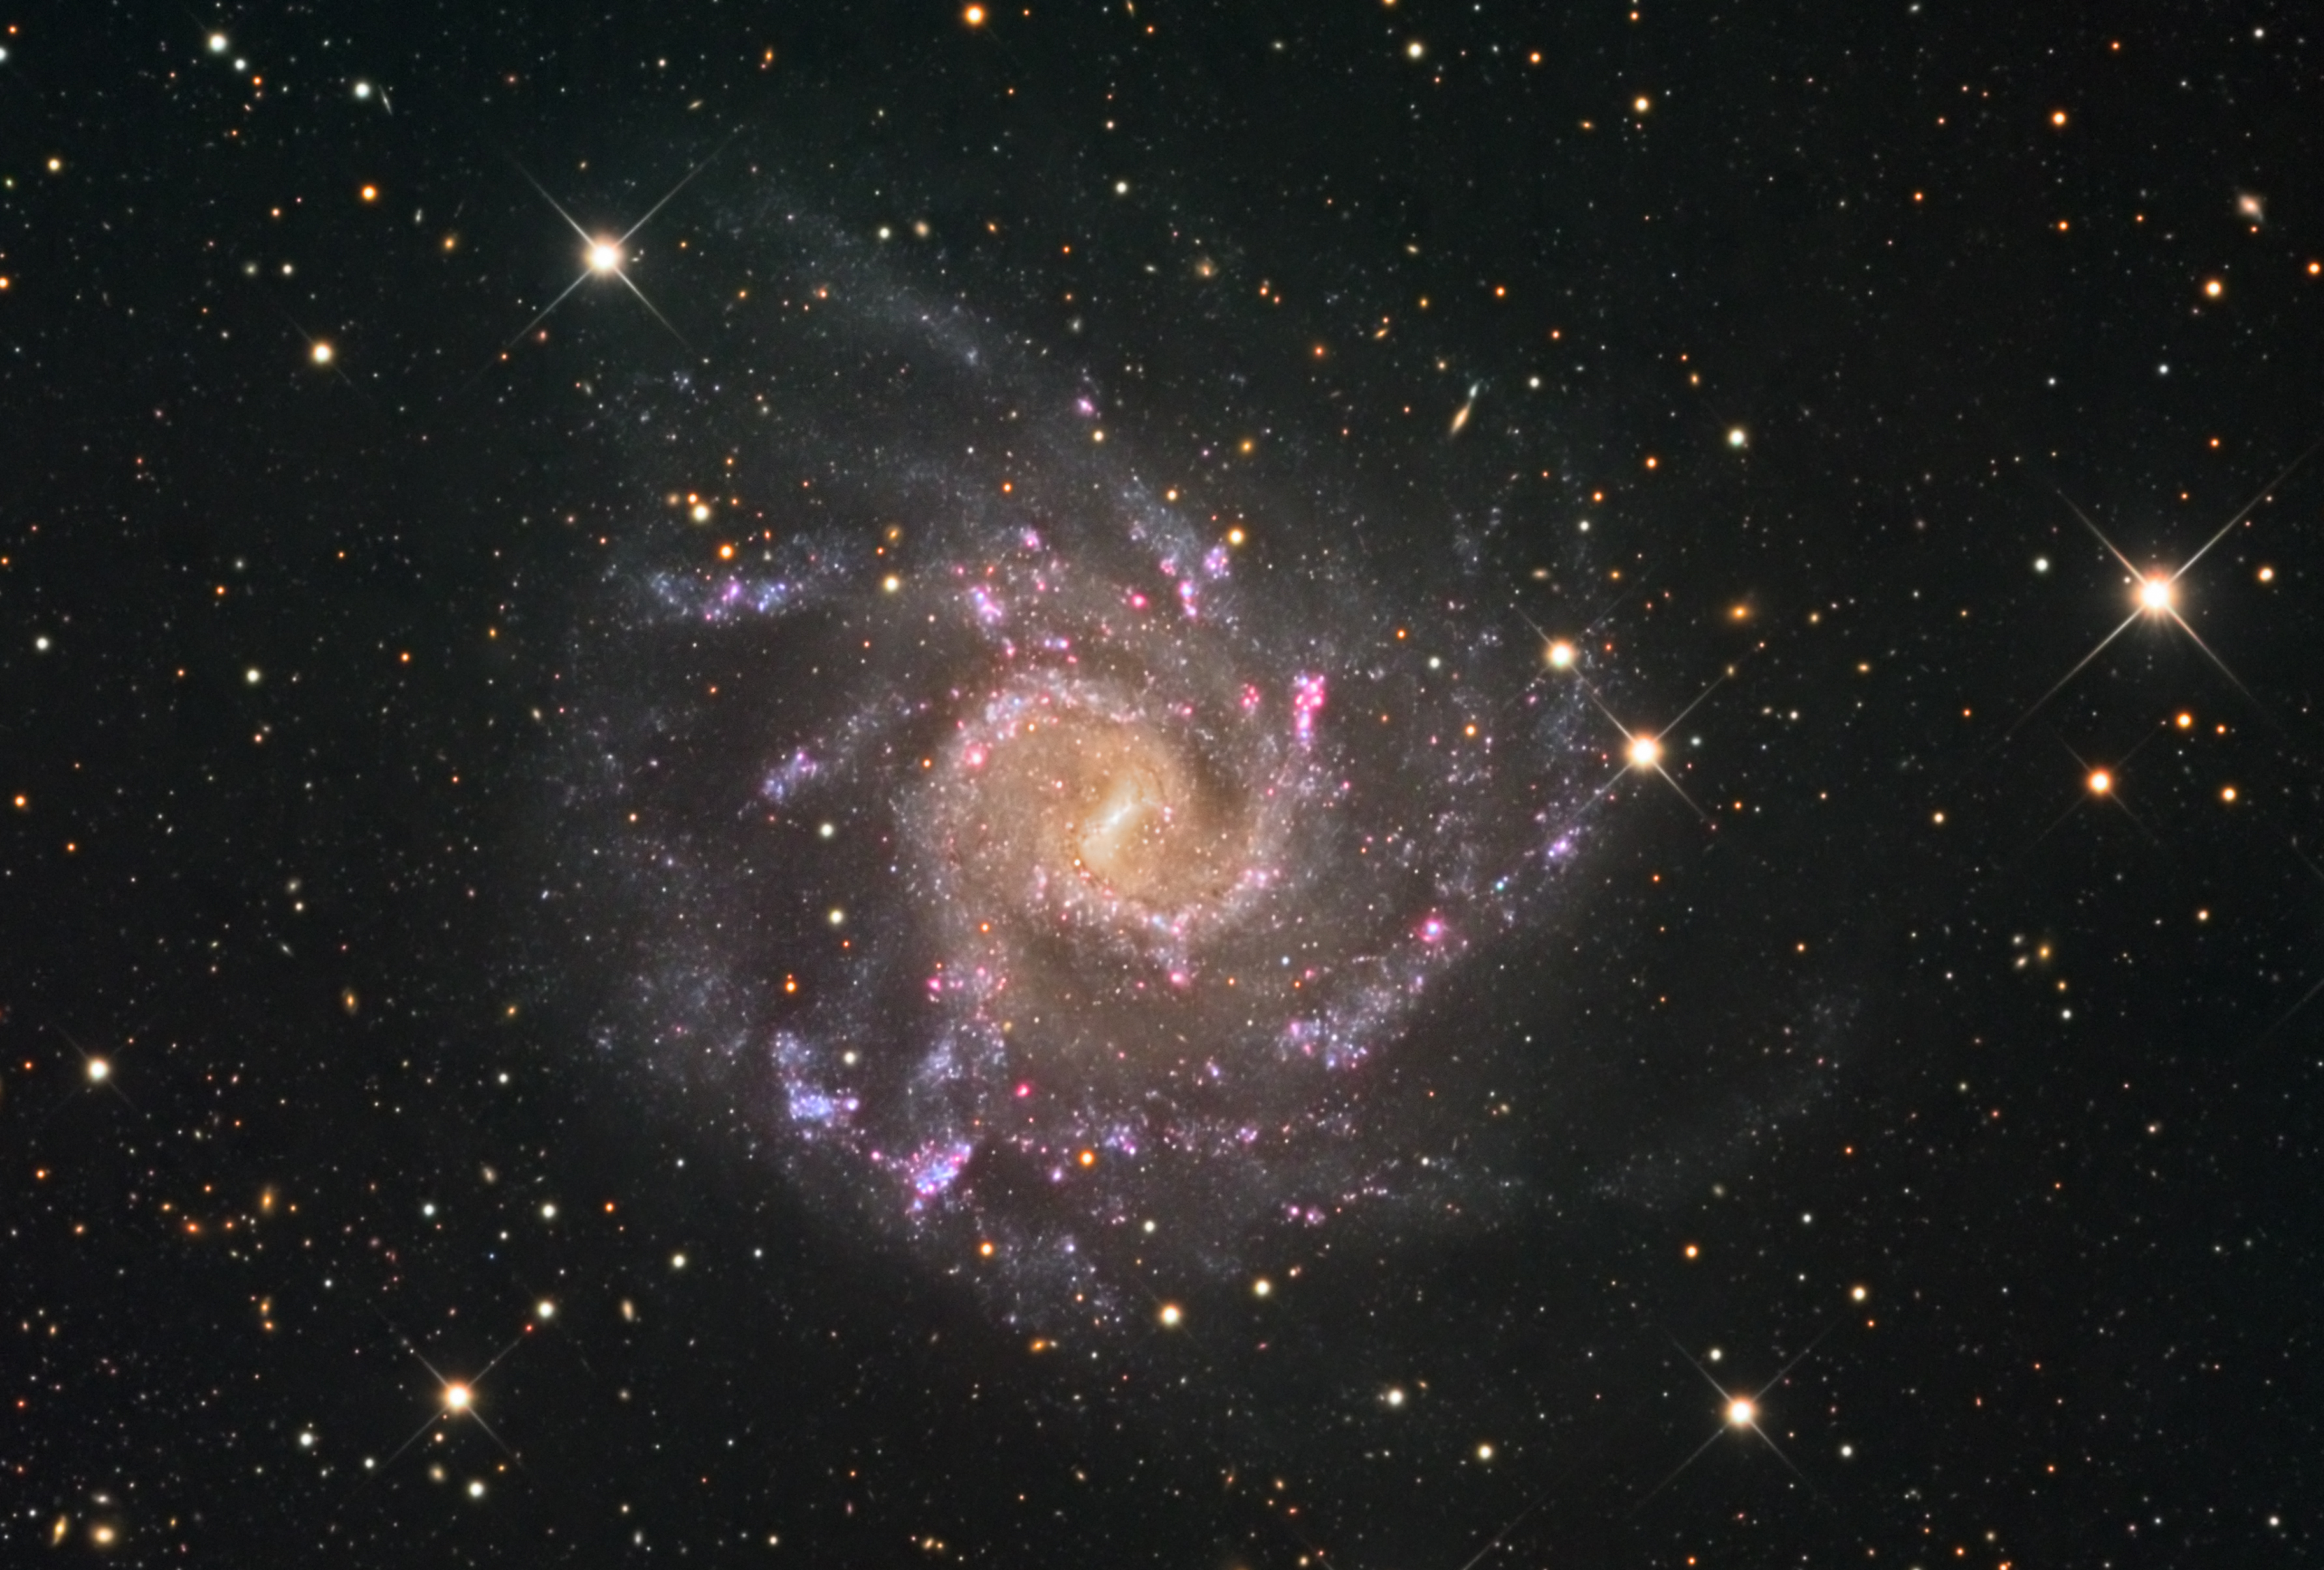 Grand Spiral Galaxy NGC 7424